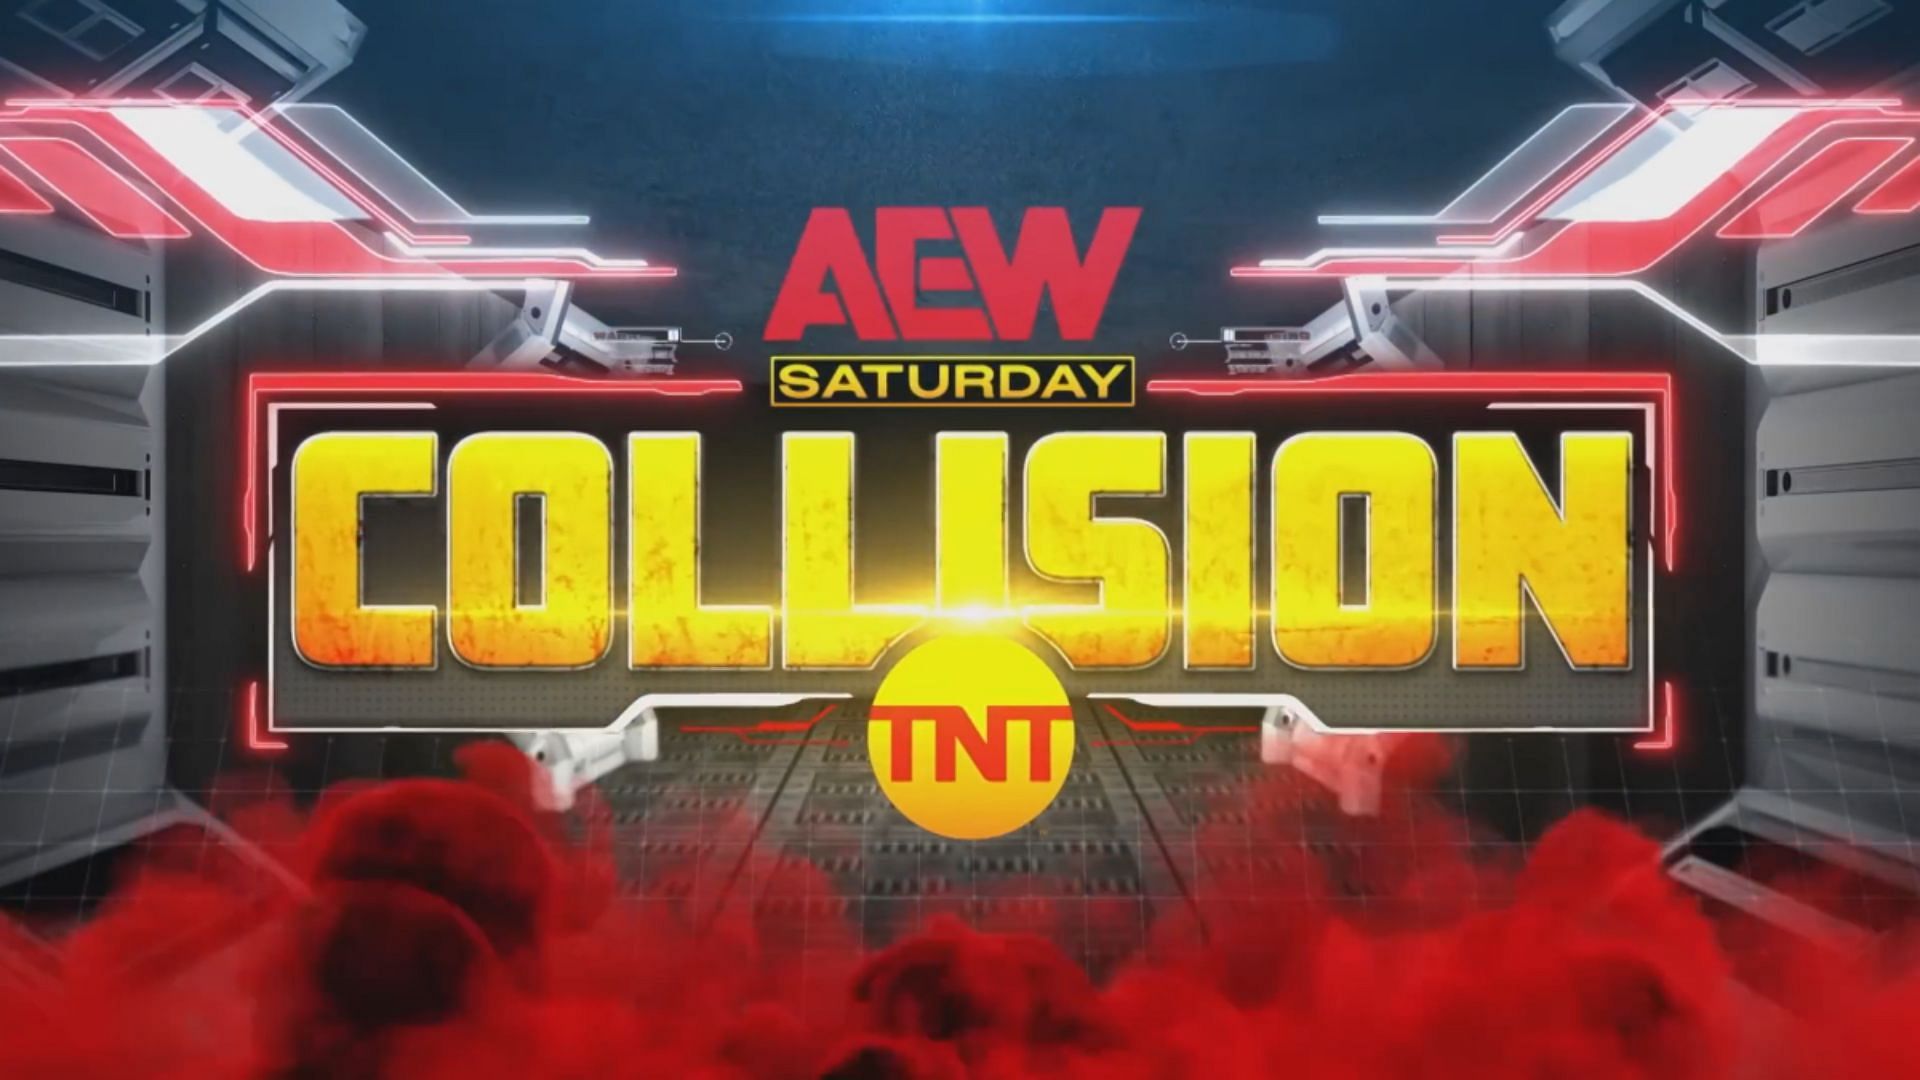 AEW Collision was premiere on June 17th